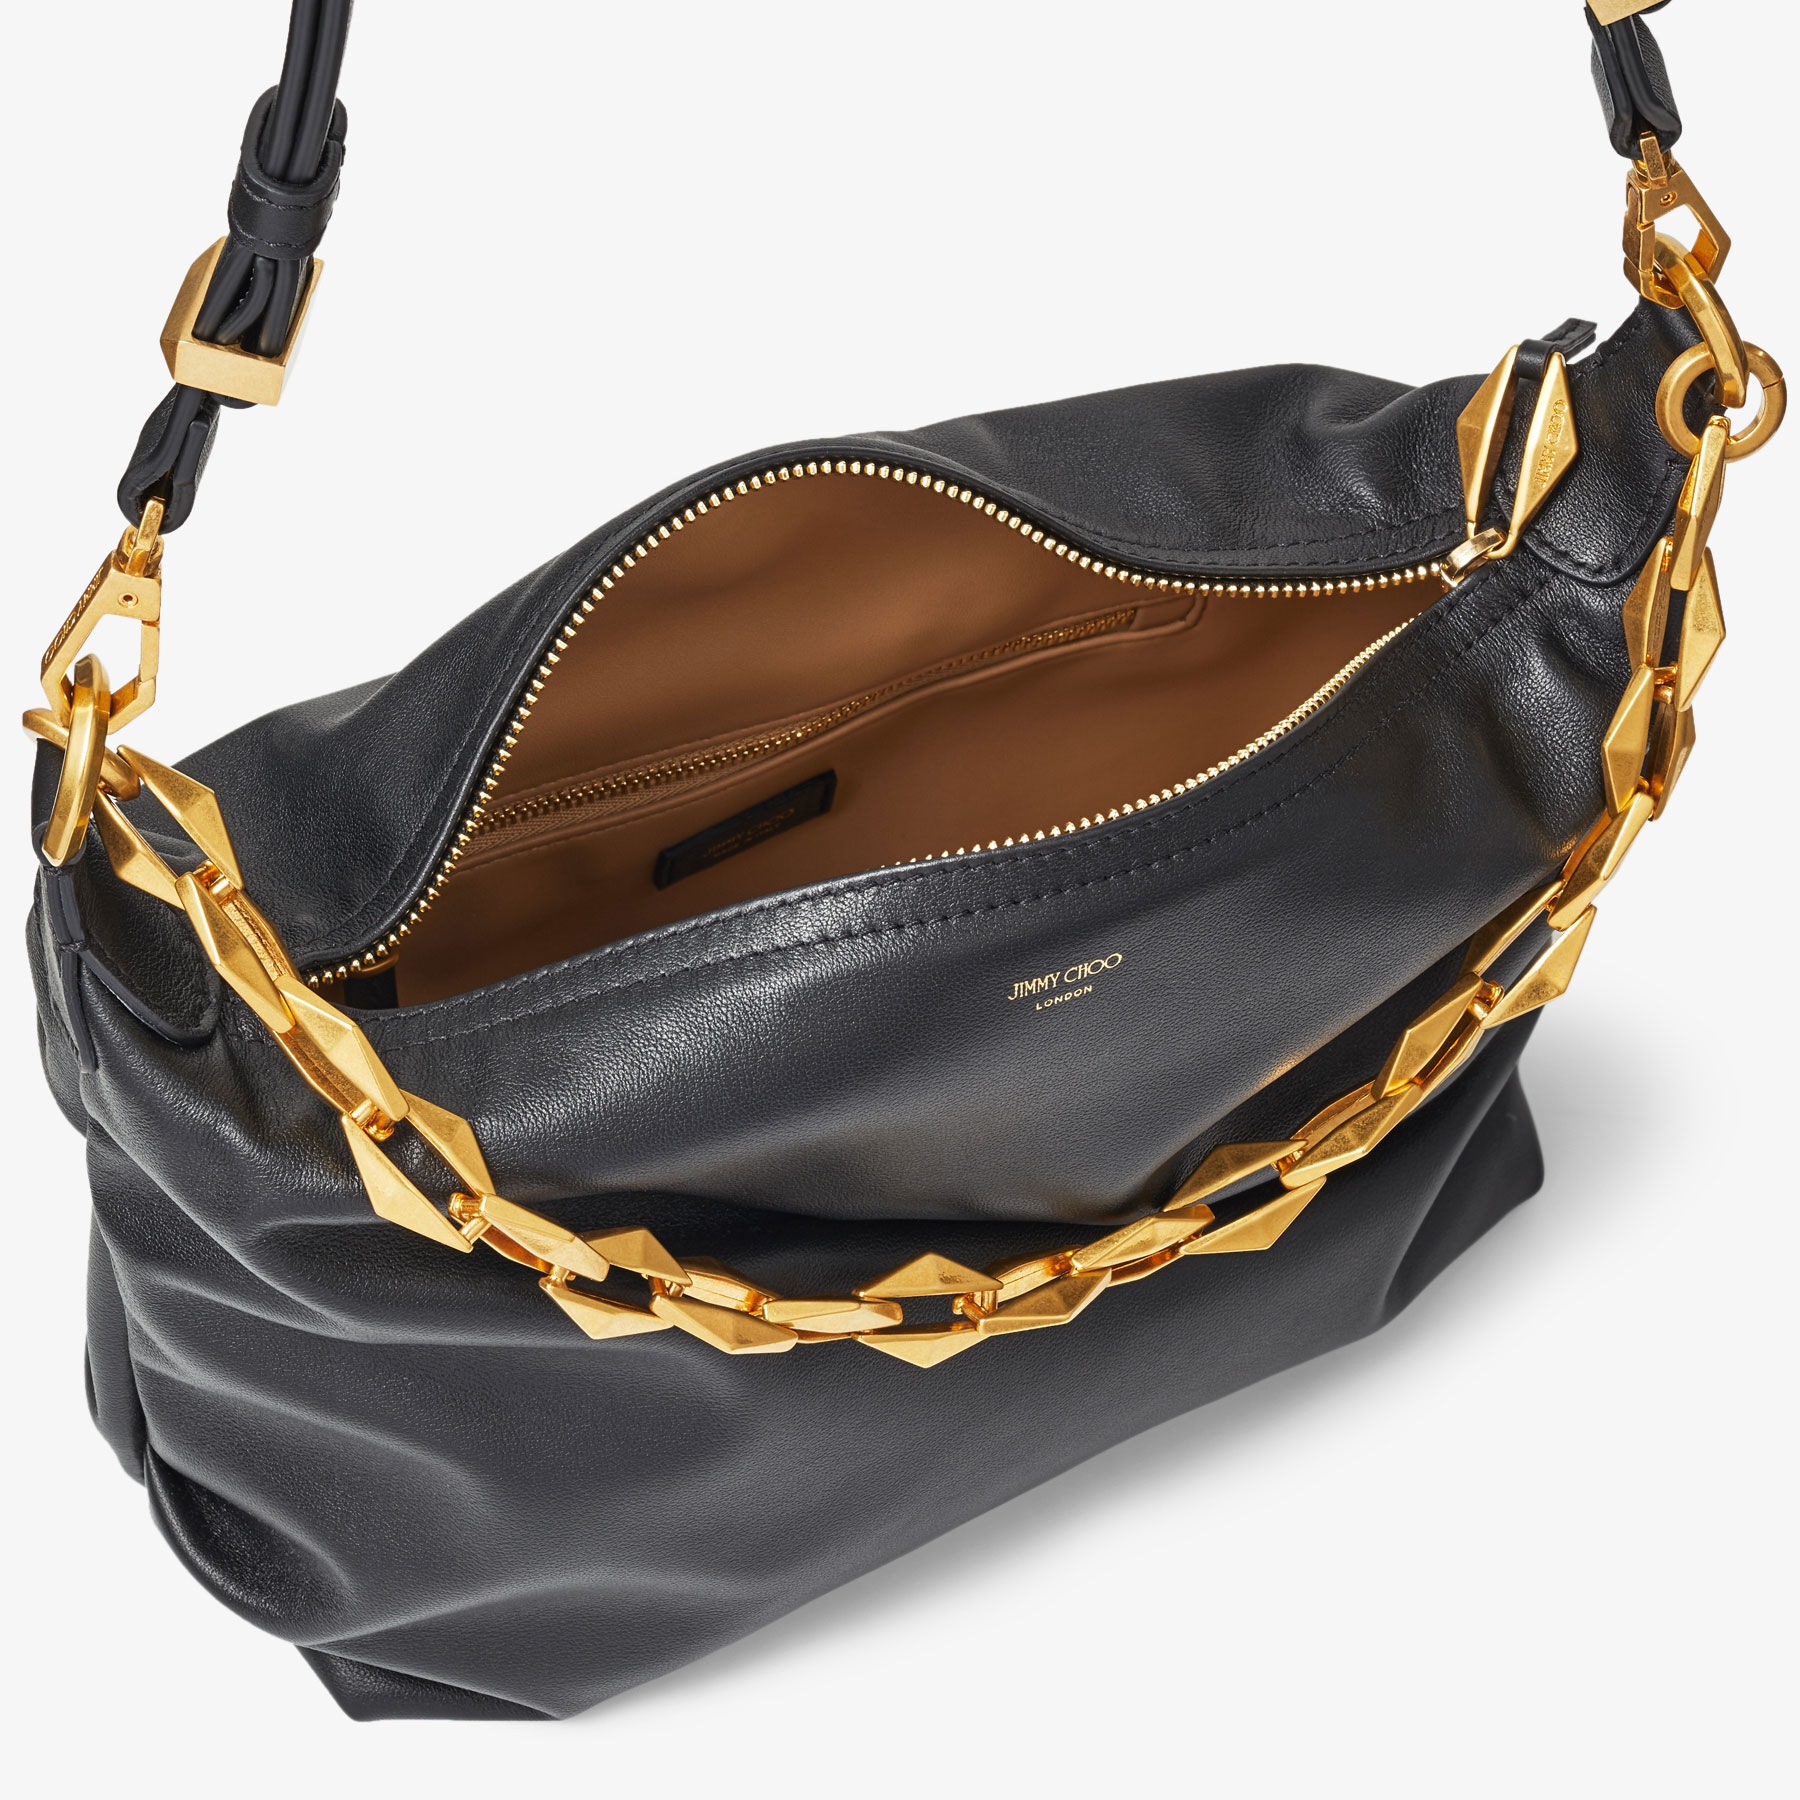 Diamond Soft Hobo S
Black Soft Calf Leather Hobo Bag with Chain Strap - 5